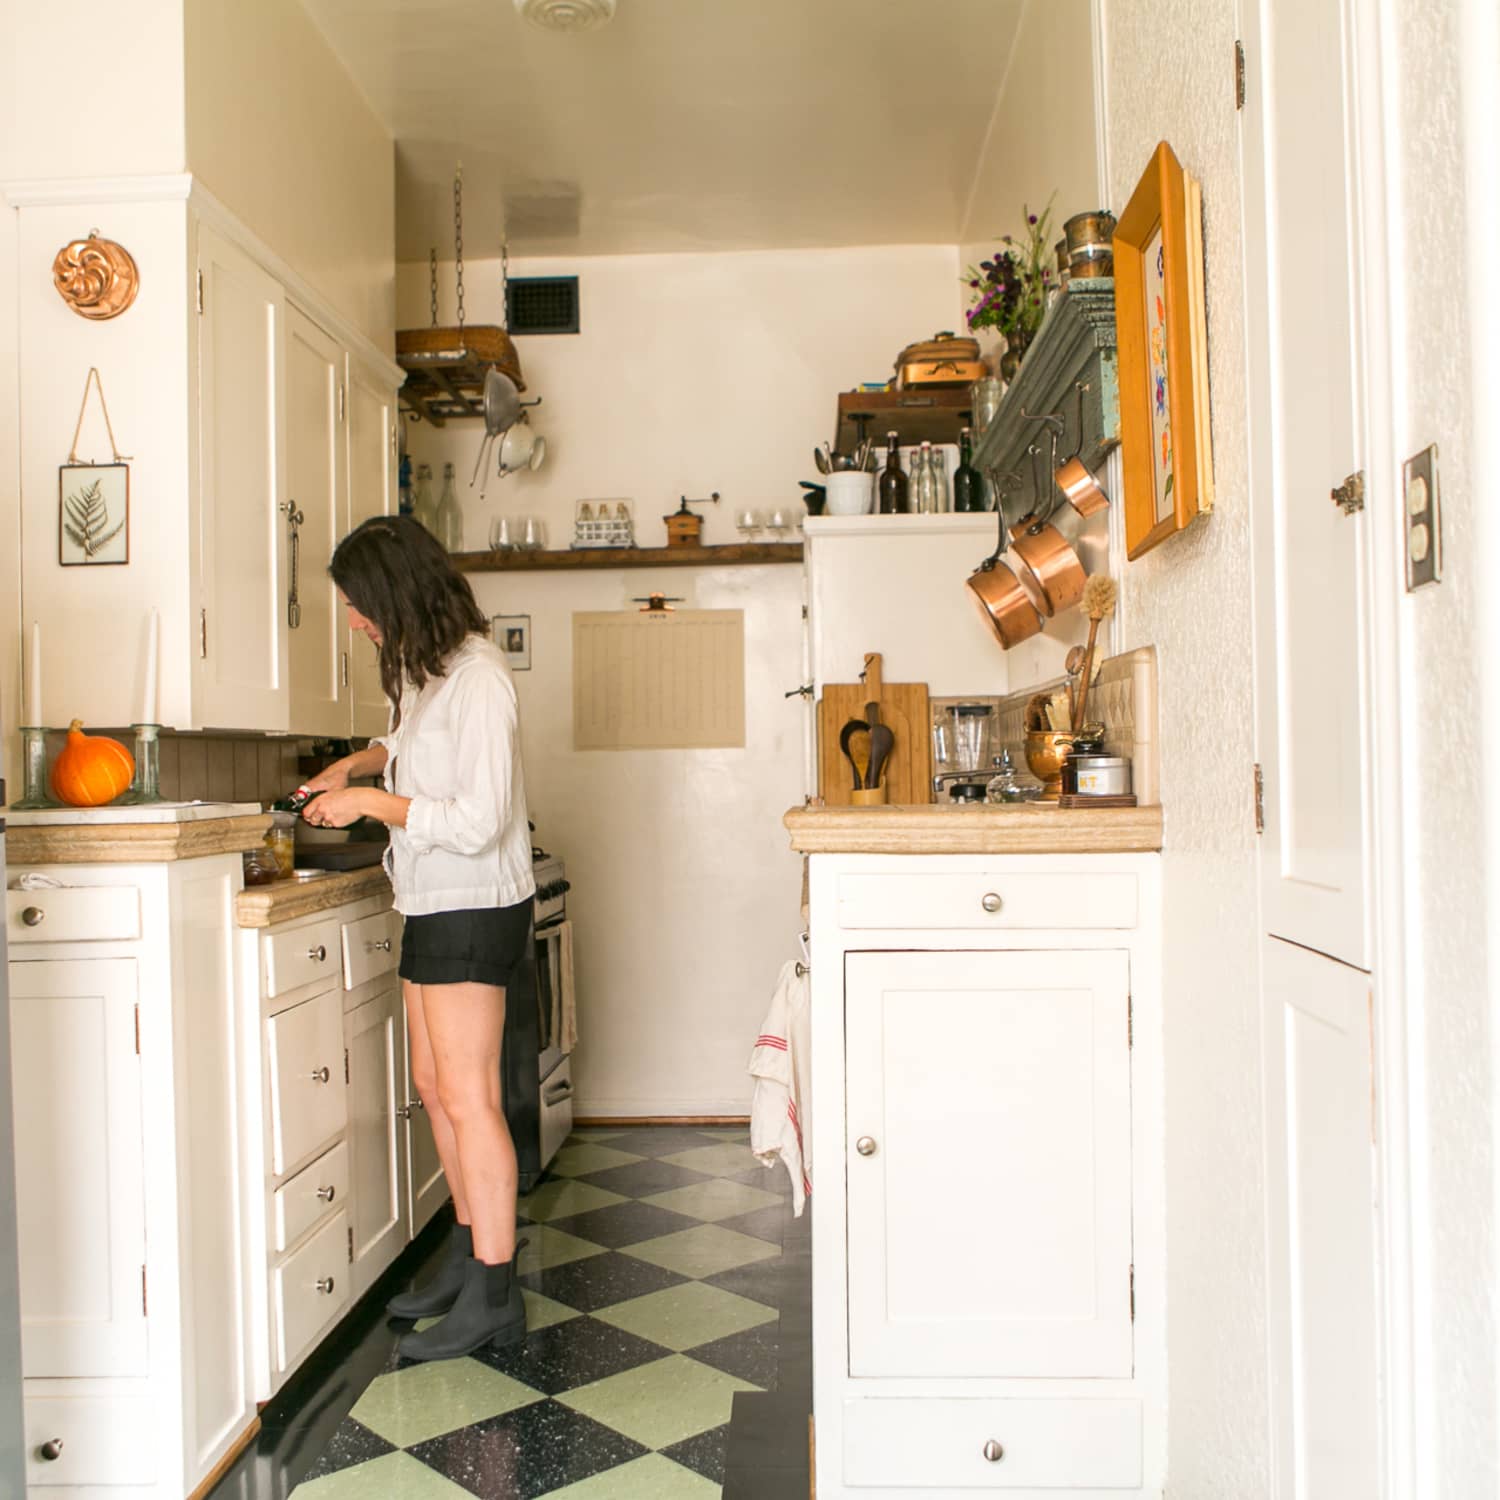 9 Kitchen Items Every “Mean Girls” Fan Should Own